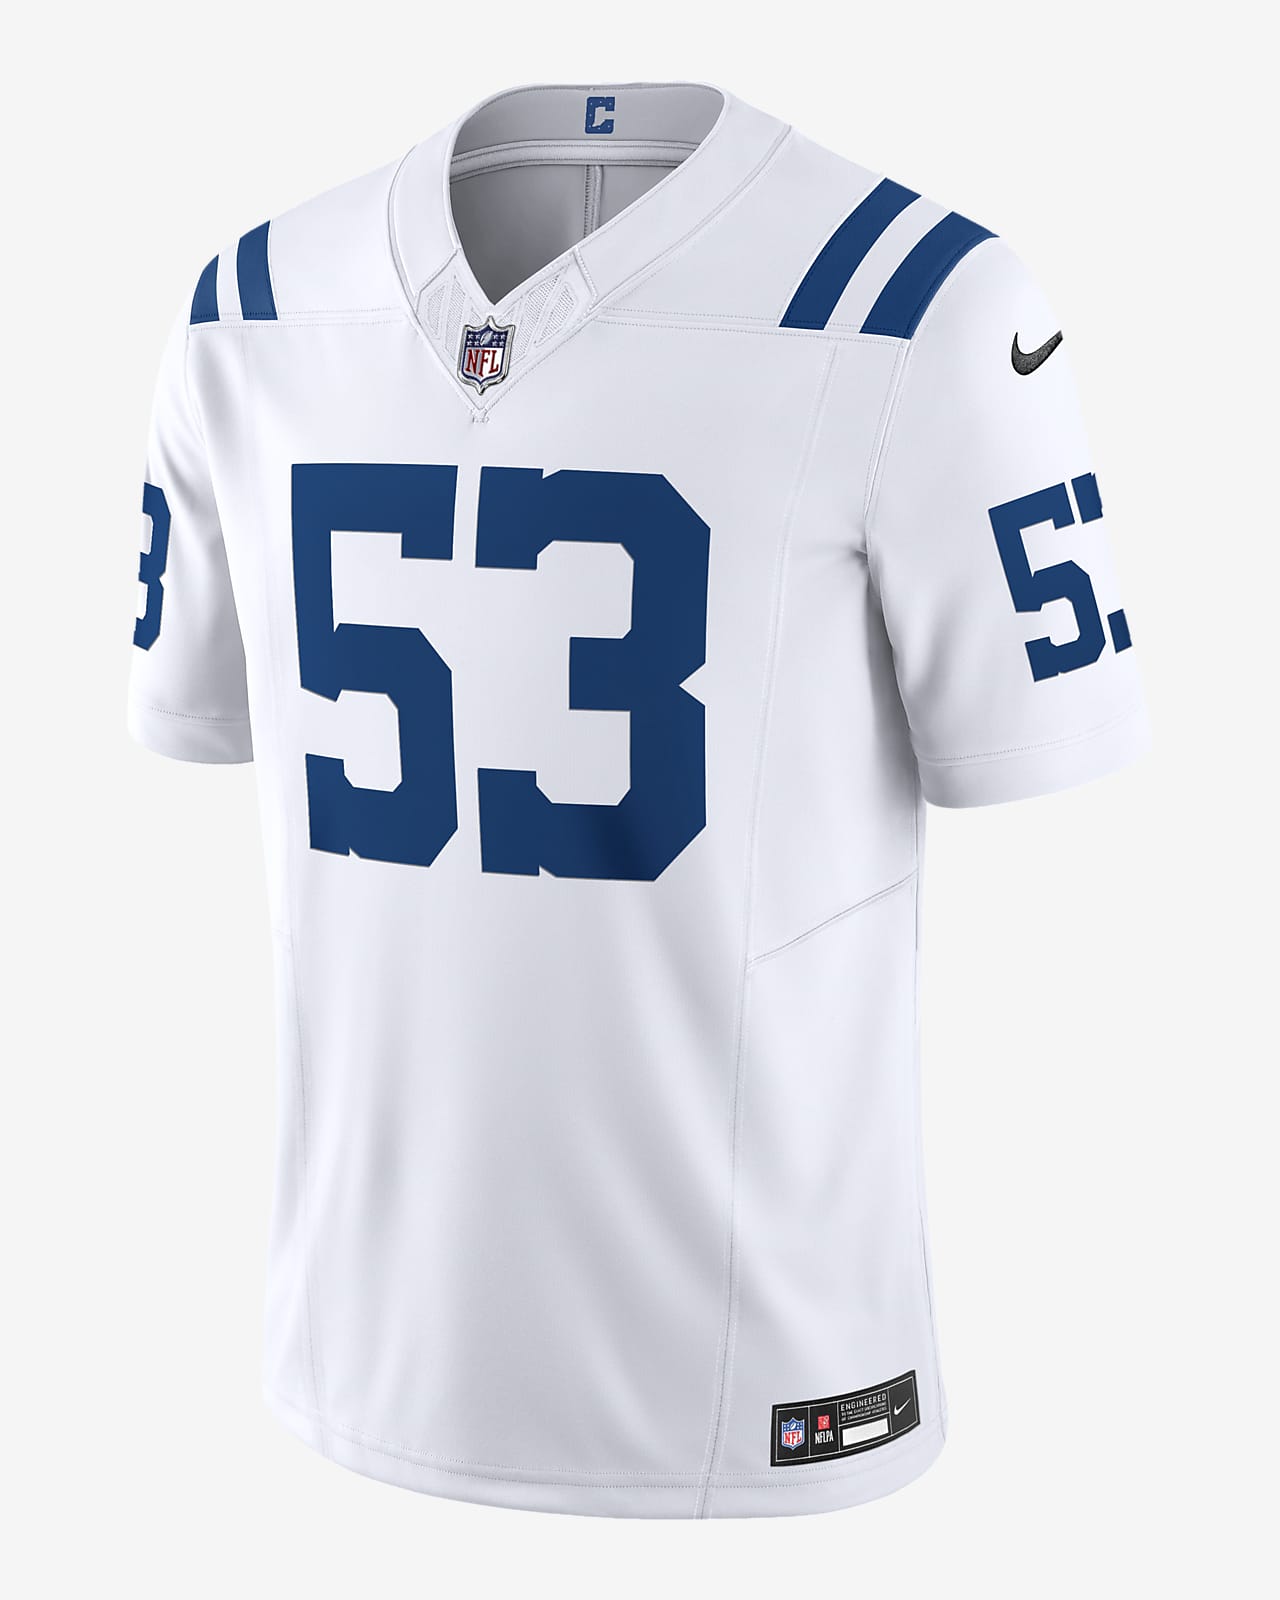 Jersey de fútbol americano Nike Dri-FIT de la NFL Limited para hombre Shaquille Leonard Indianapolis Colts